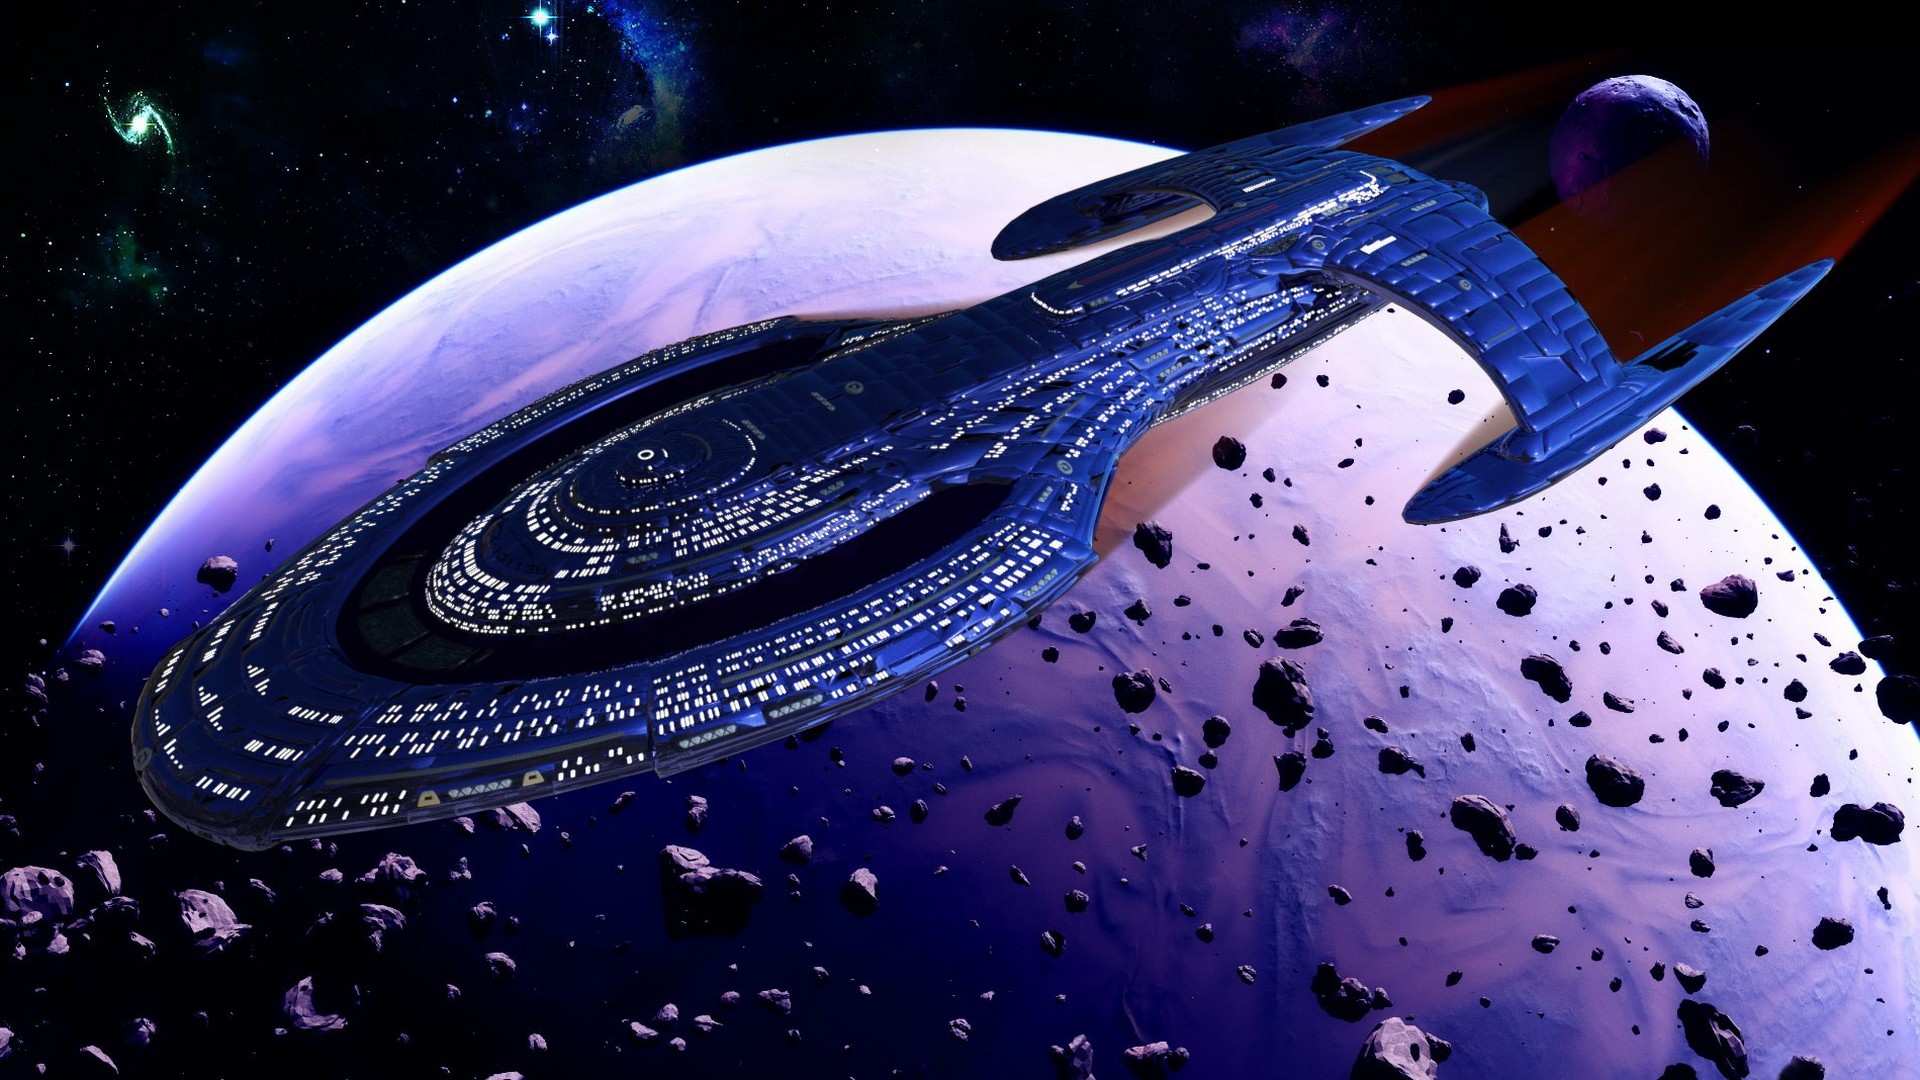 General 1920x1080 Star Trek CGI vehicle space planet science fiction spaceship Star Trek Ships digital art